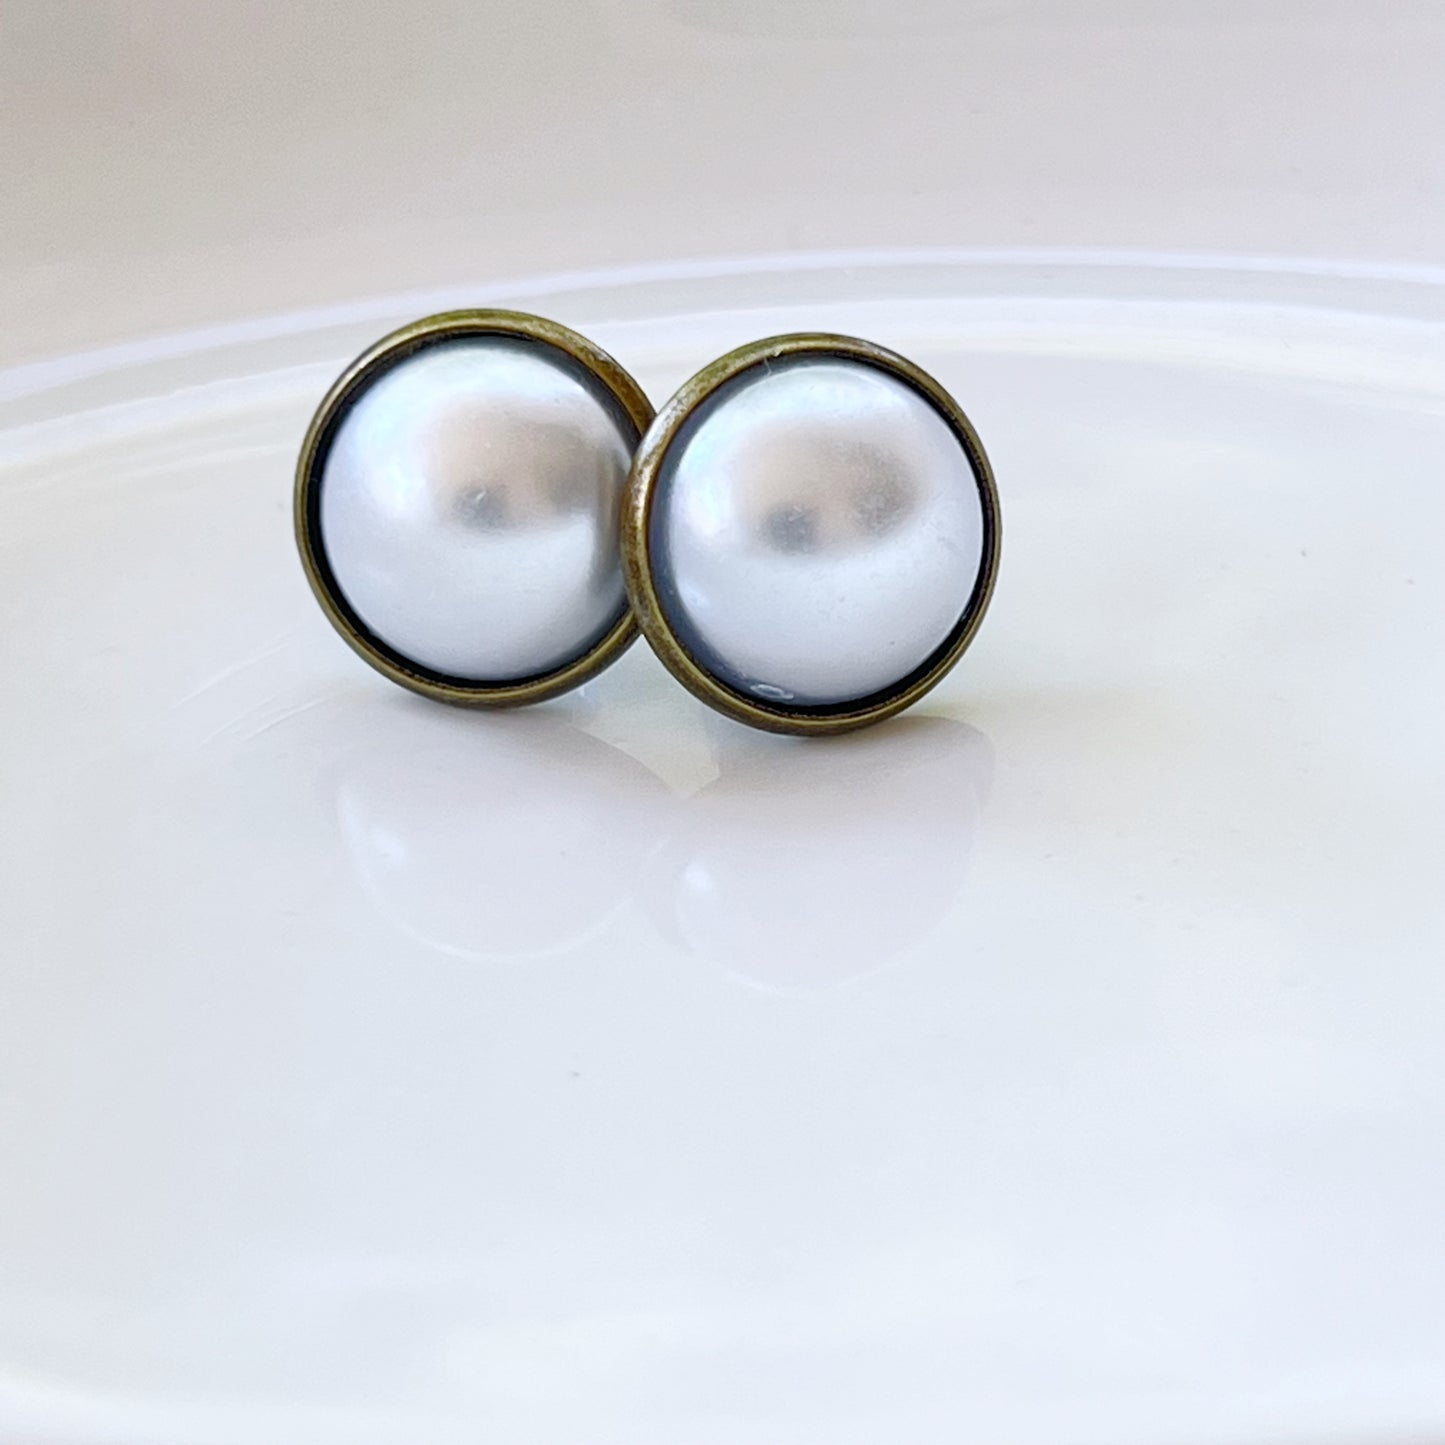 Silver White Pearl Earrings Studs, Stainless Steel Earrings, Boho Earrings, Bridesmaid Earrings, Mens Earrings Stud, Unique Earring